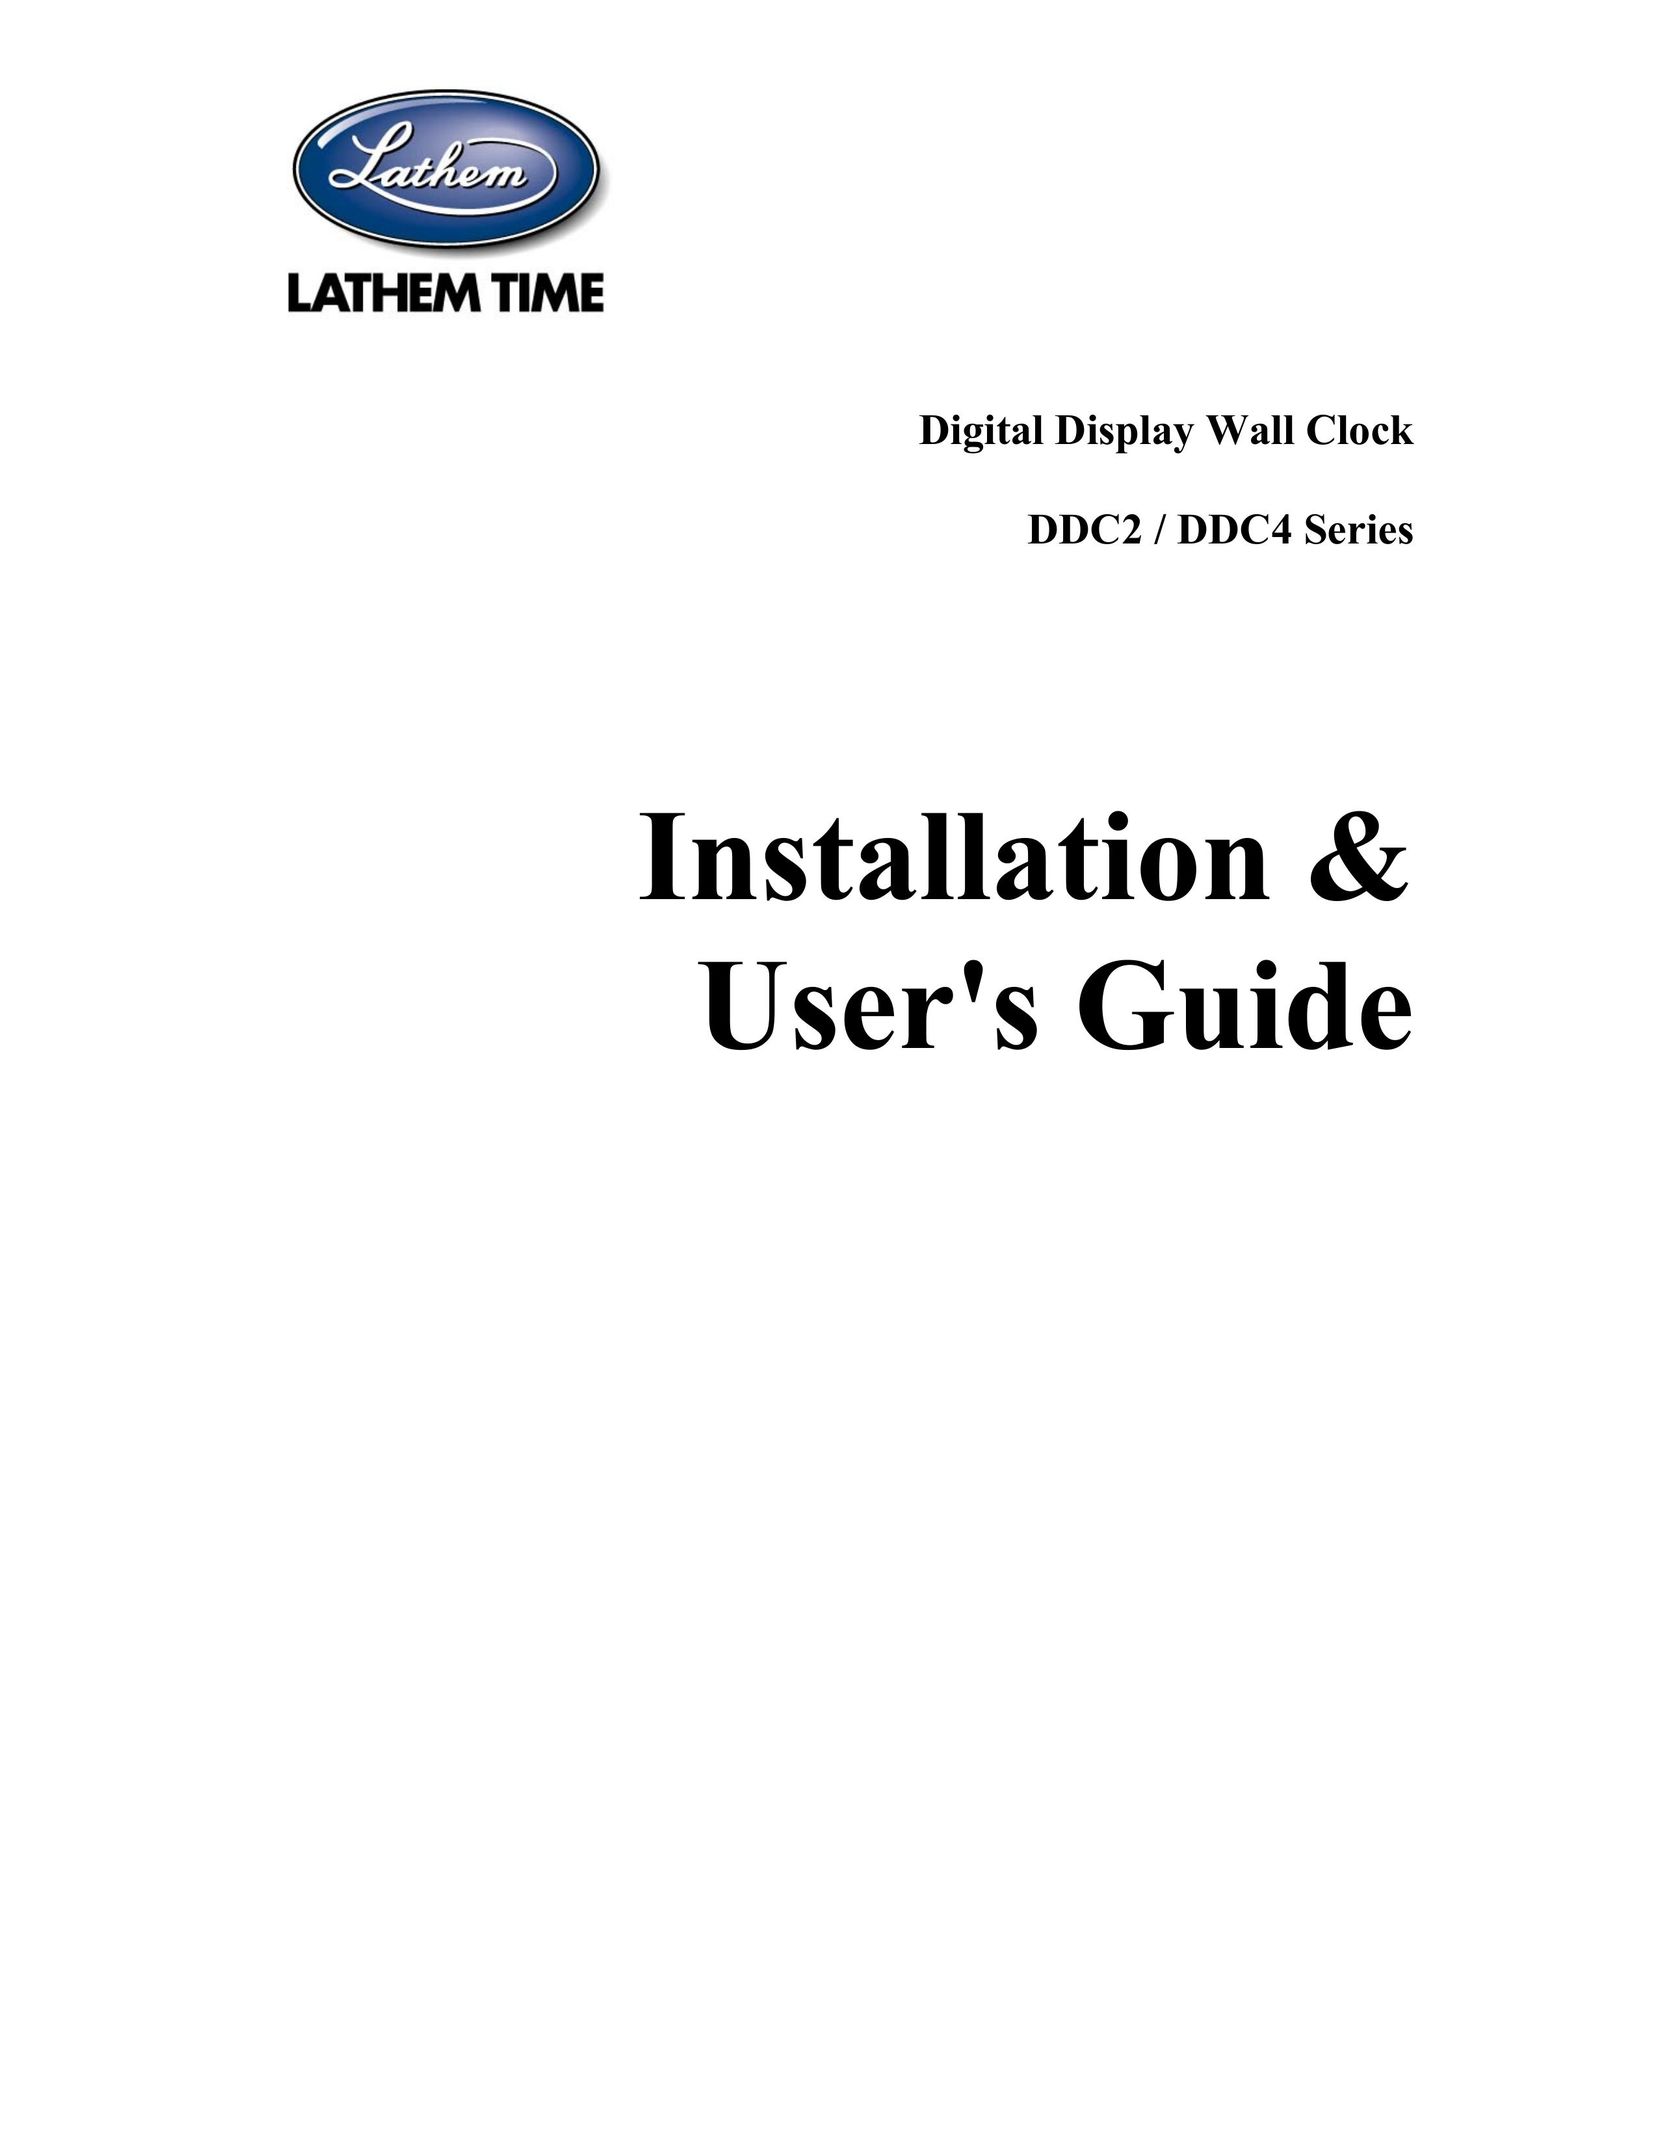 Lathem DDC4 Clock User Manual